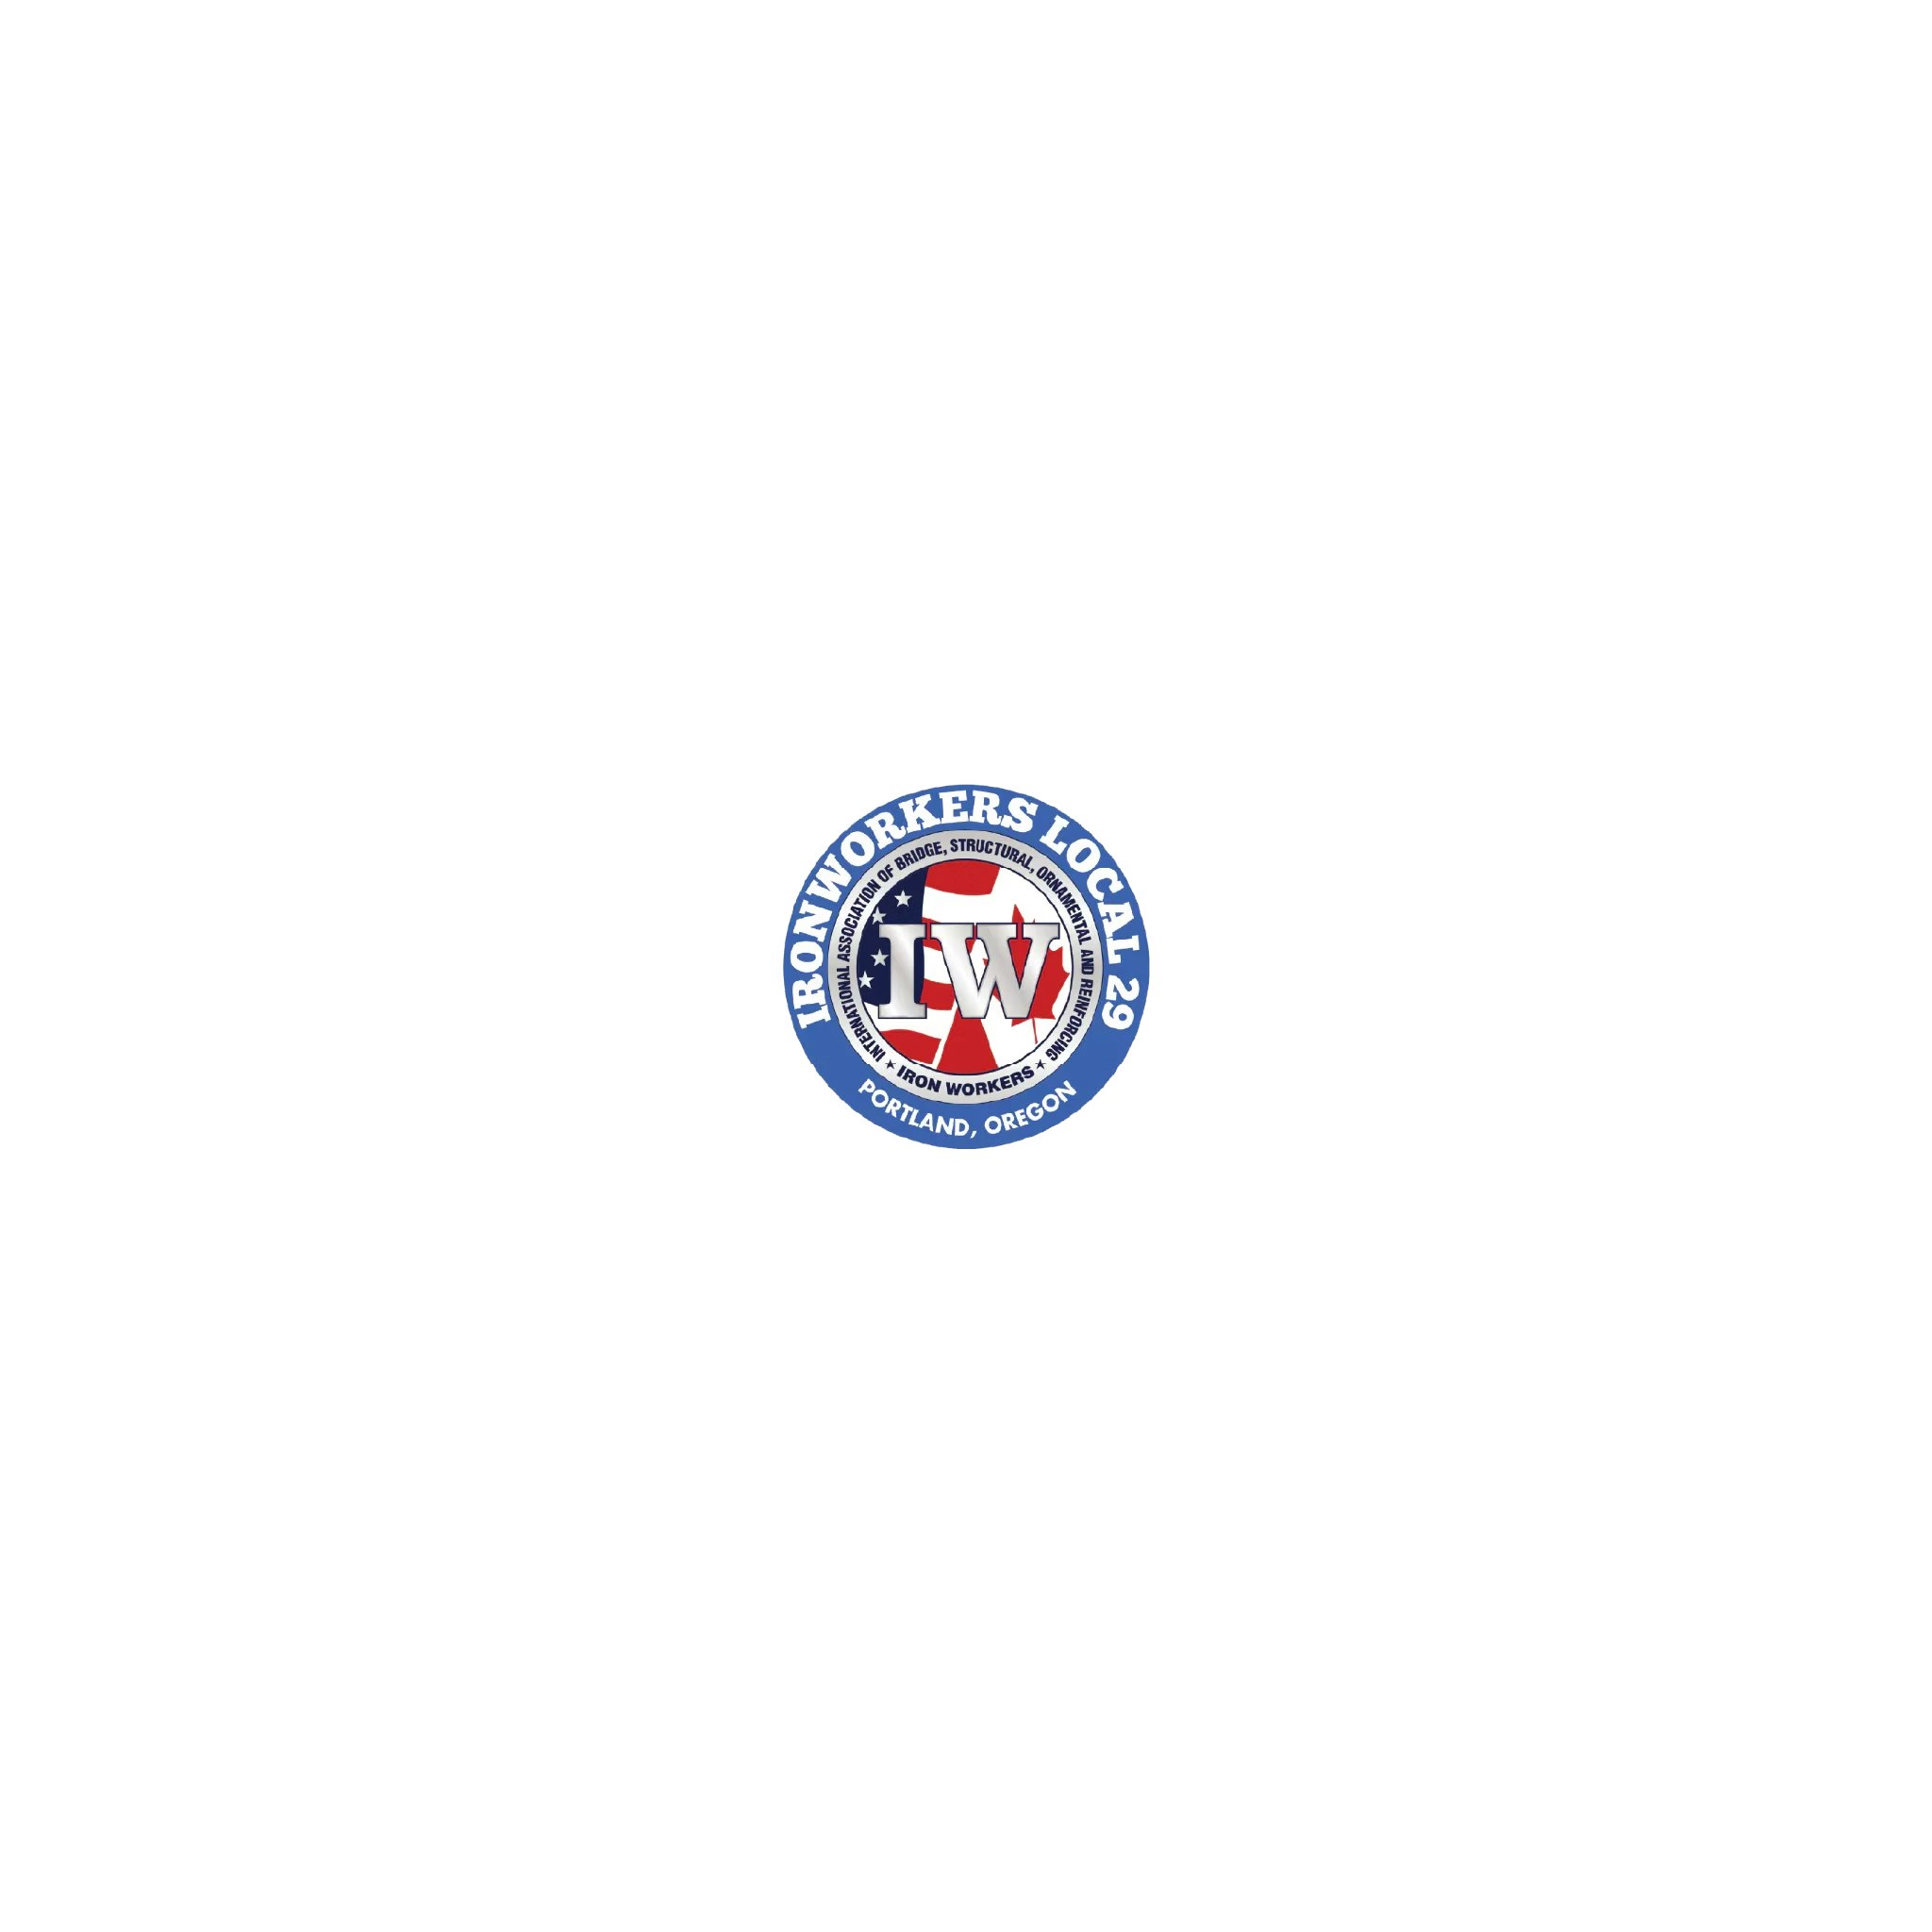 Logo of endorser